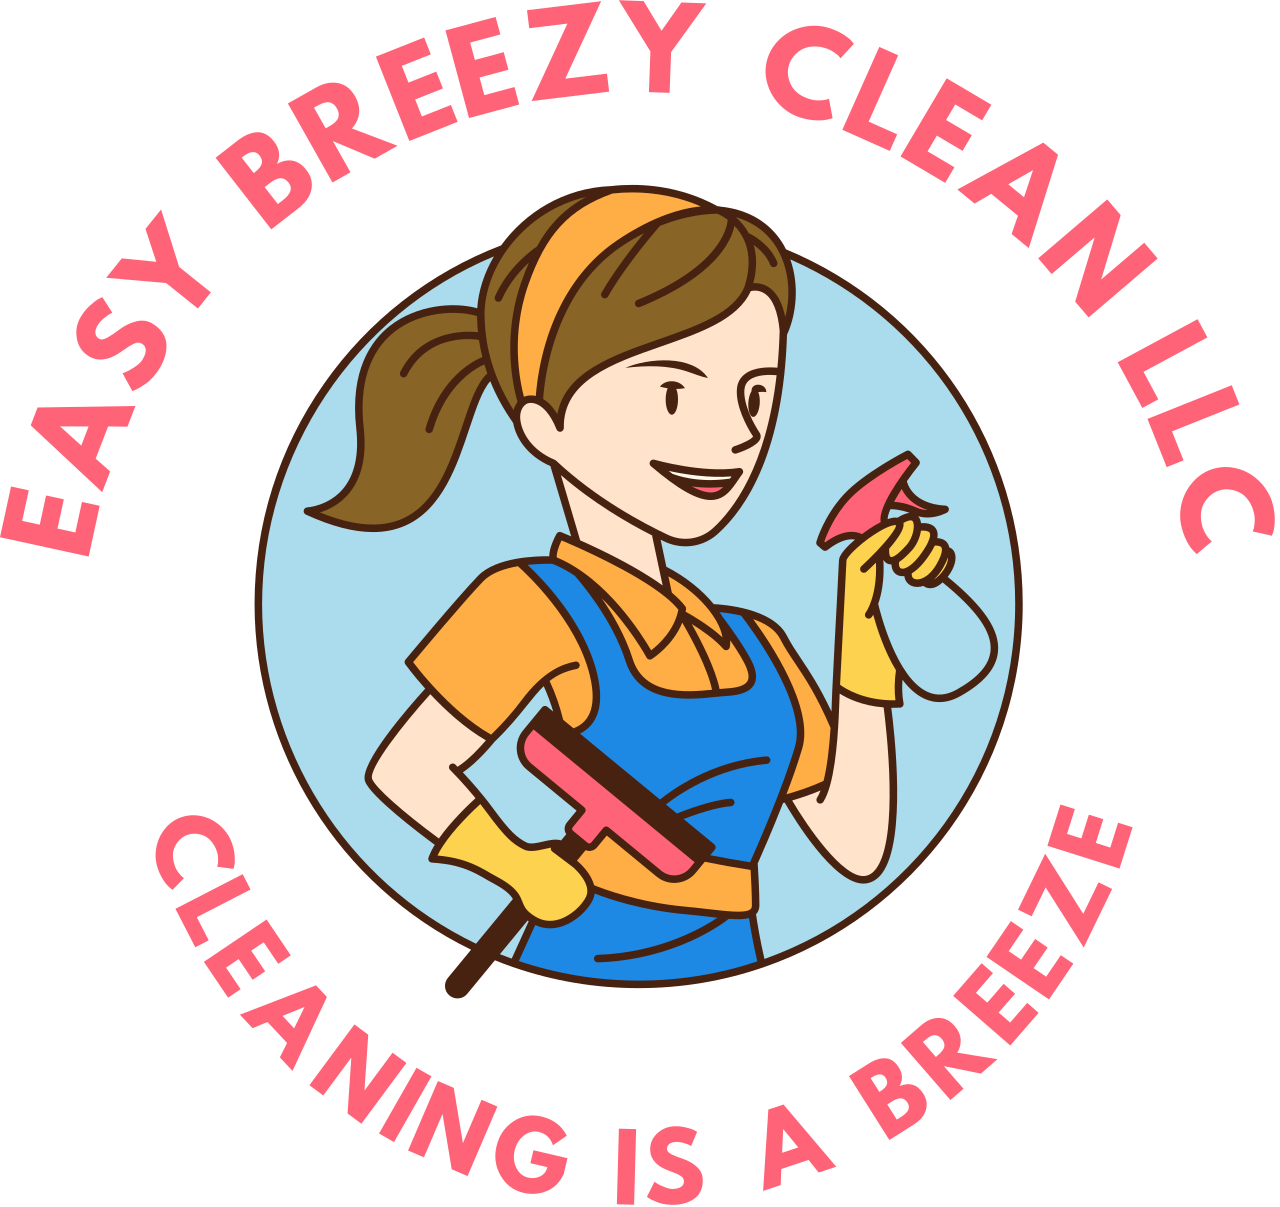 EASY BREEZY CLEAN LLC's web page